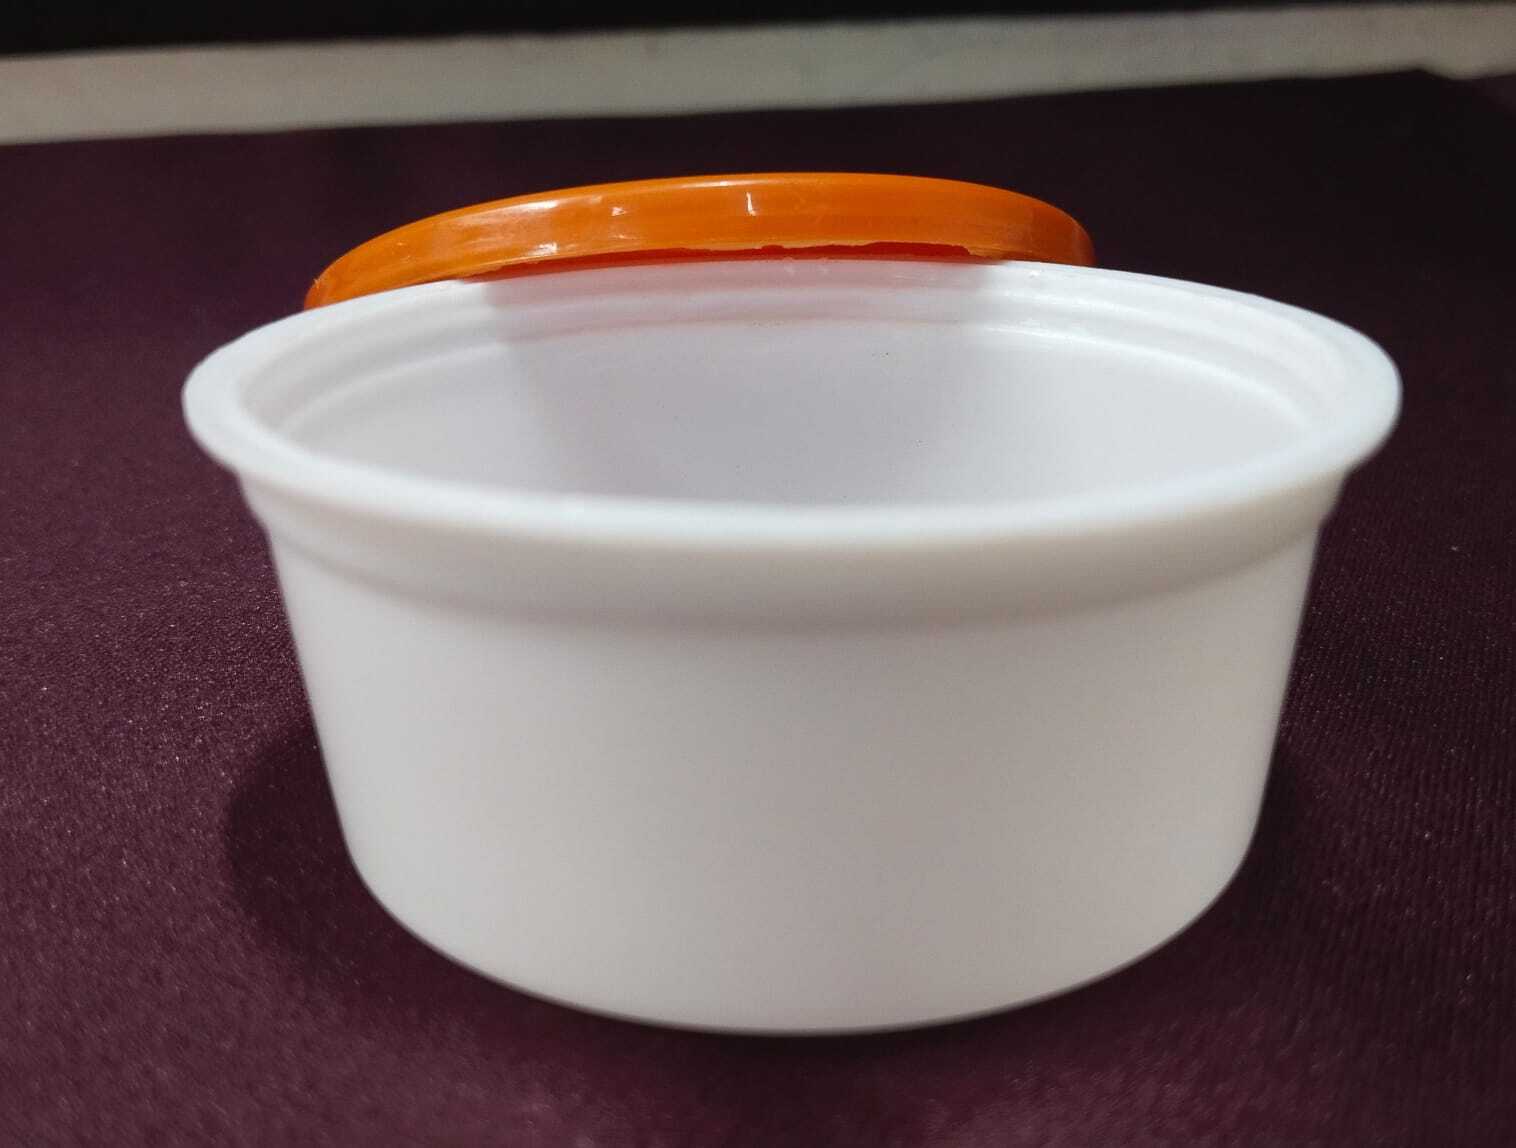 50gm plastic food container set (0495)